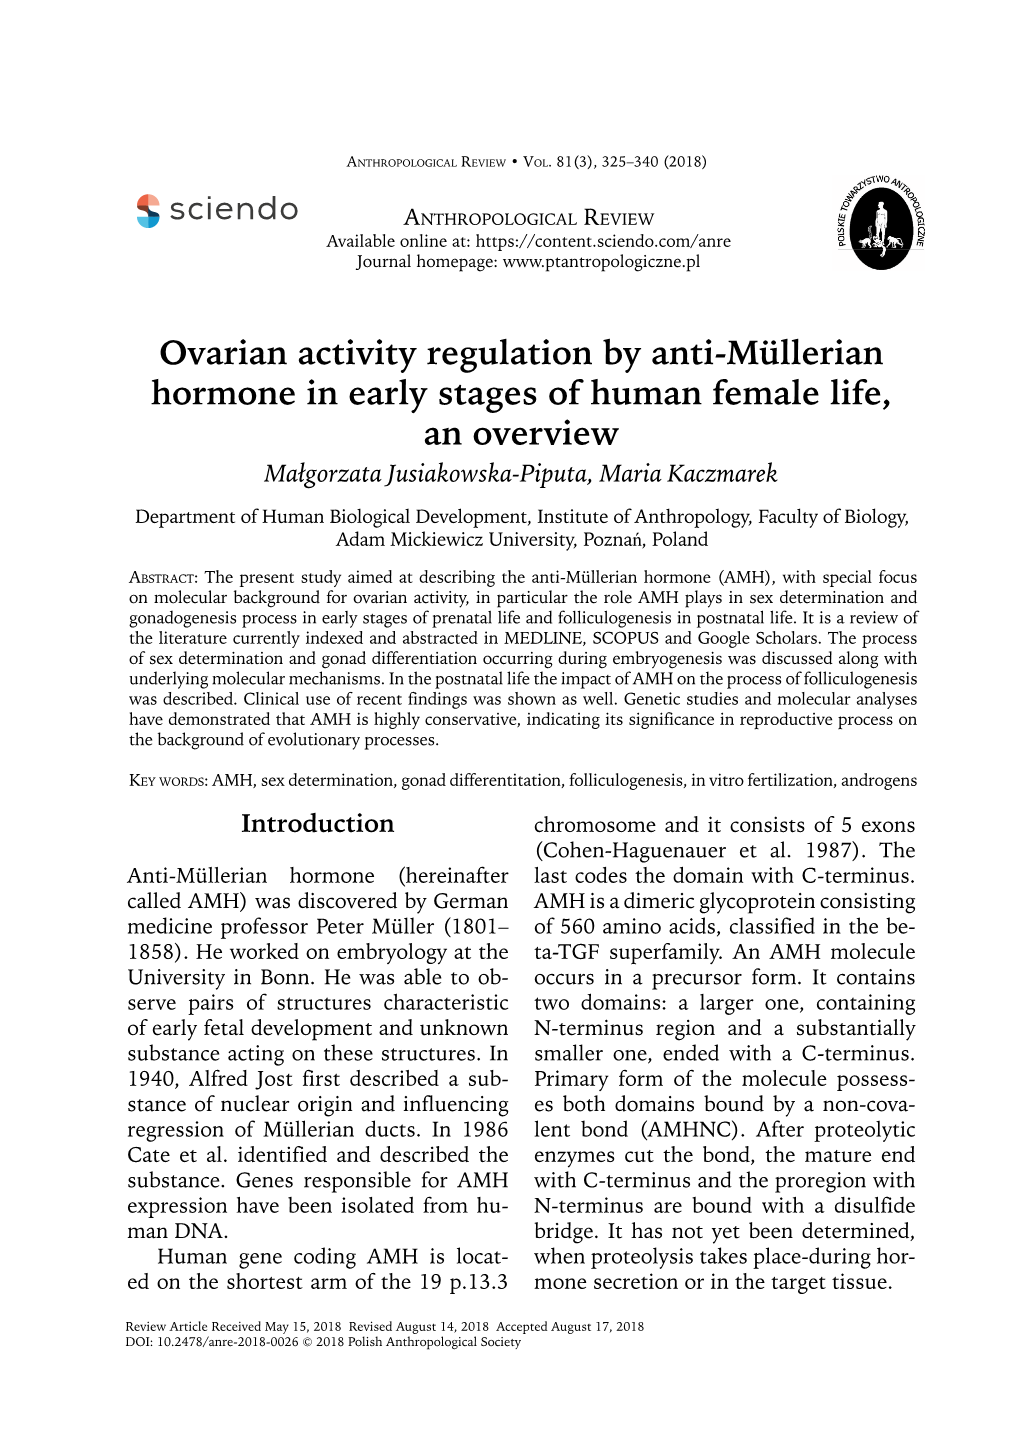 Ovarian Activity Regulation by Anti-Müllerian Hormone in Early Stages of Human Female Life, an Overview Małgorzata Jusiakowska-Piputa, Maria Kaczmarek